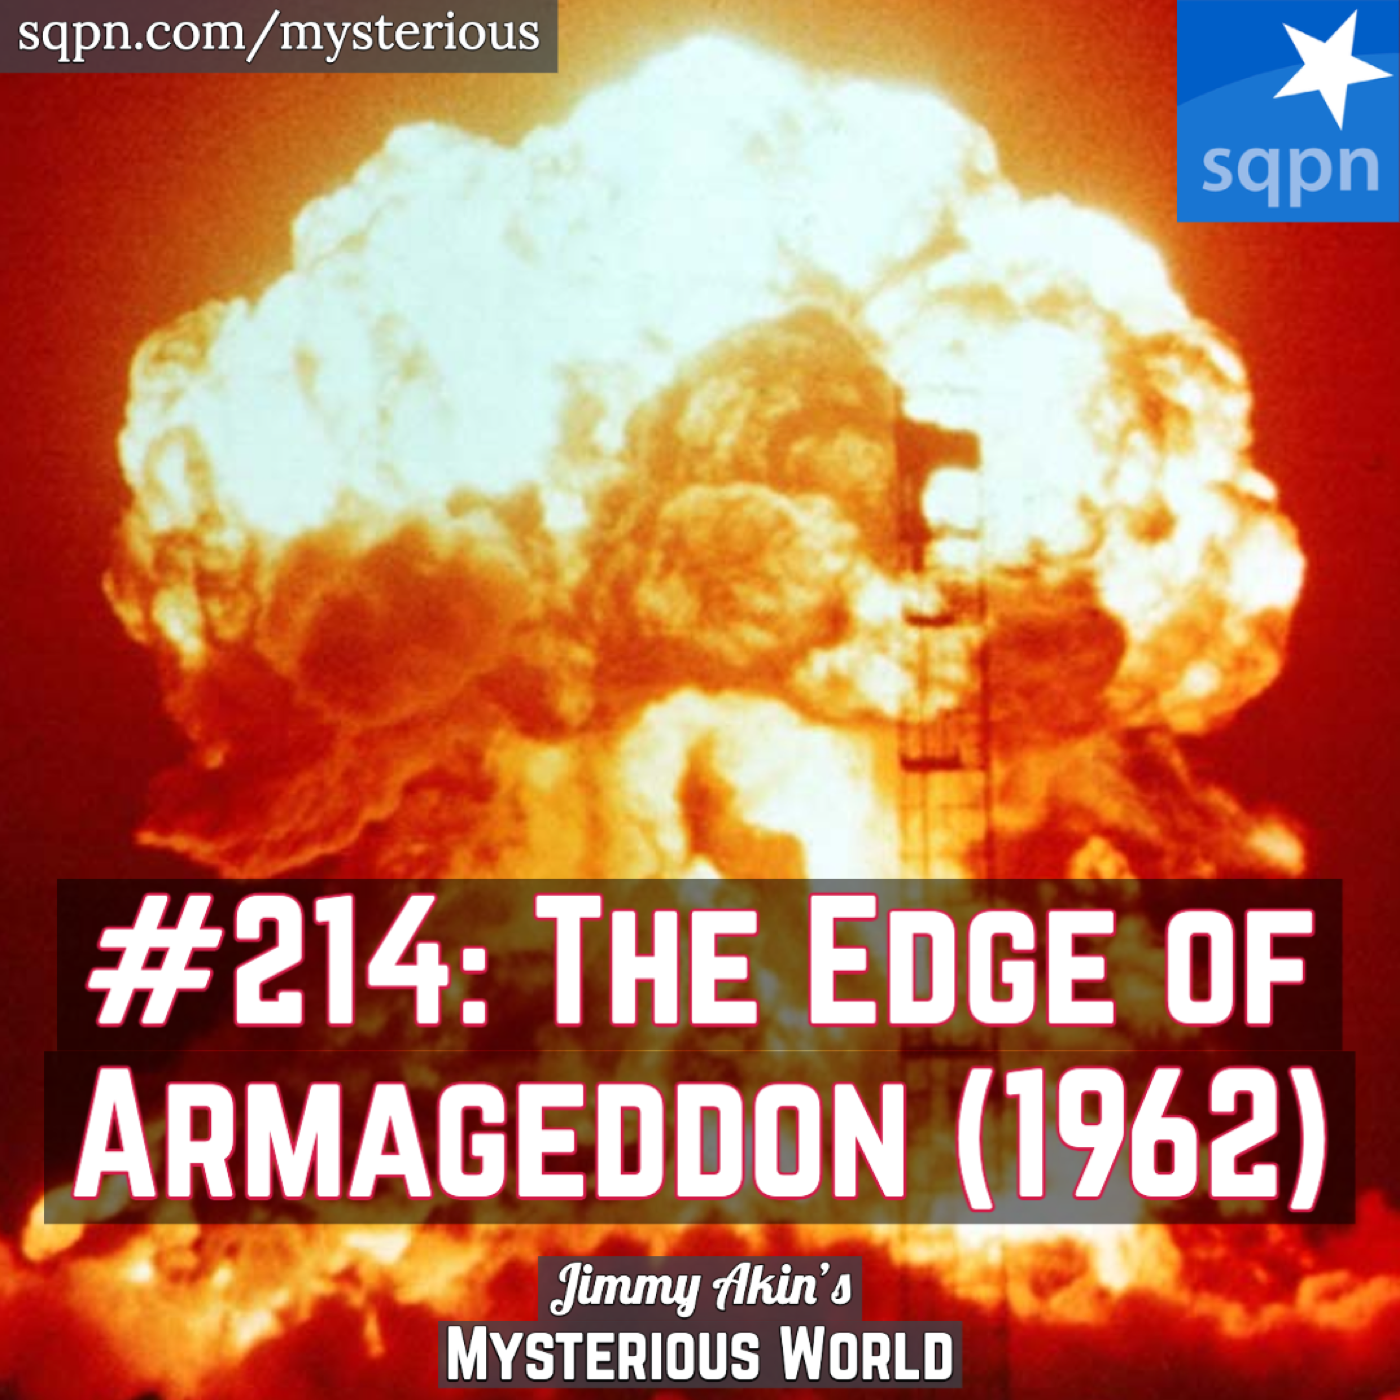 The Edge of Armageddon (Cuban Missile Crisis, Kennedy, Khrushchev)